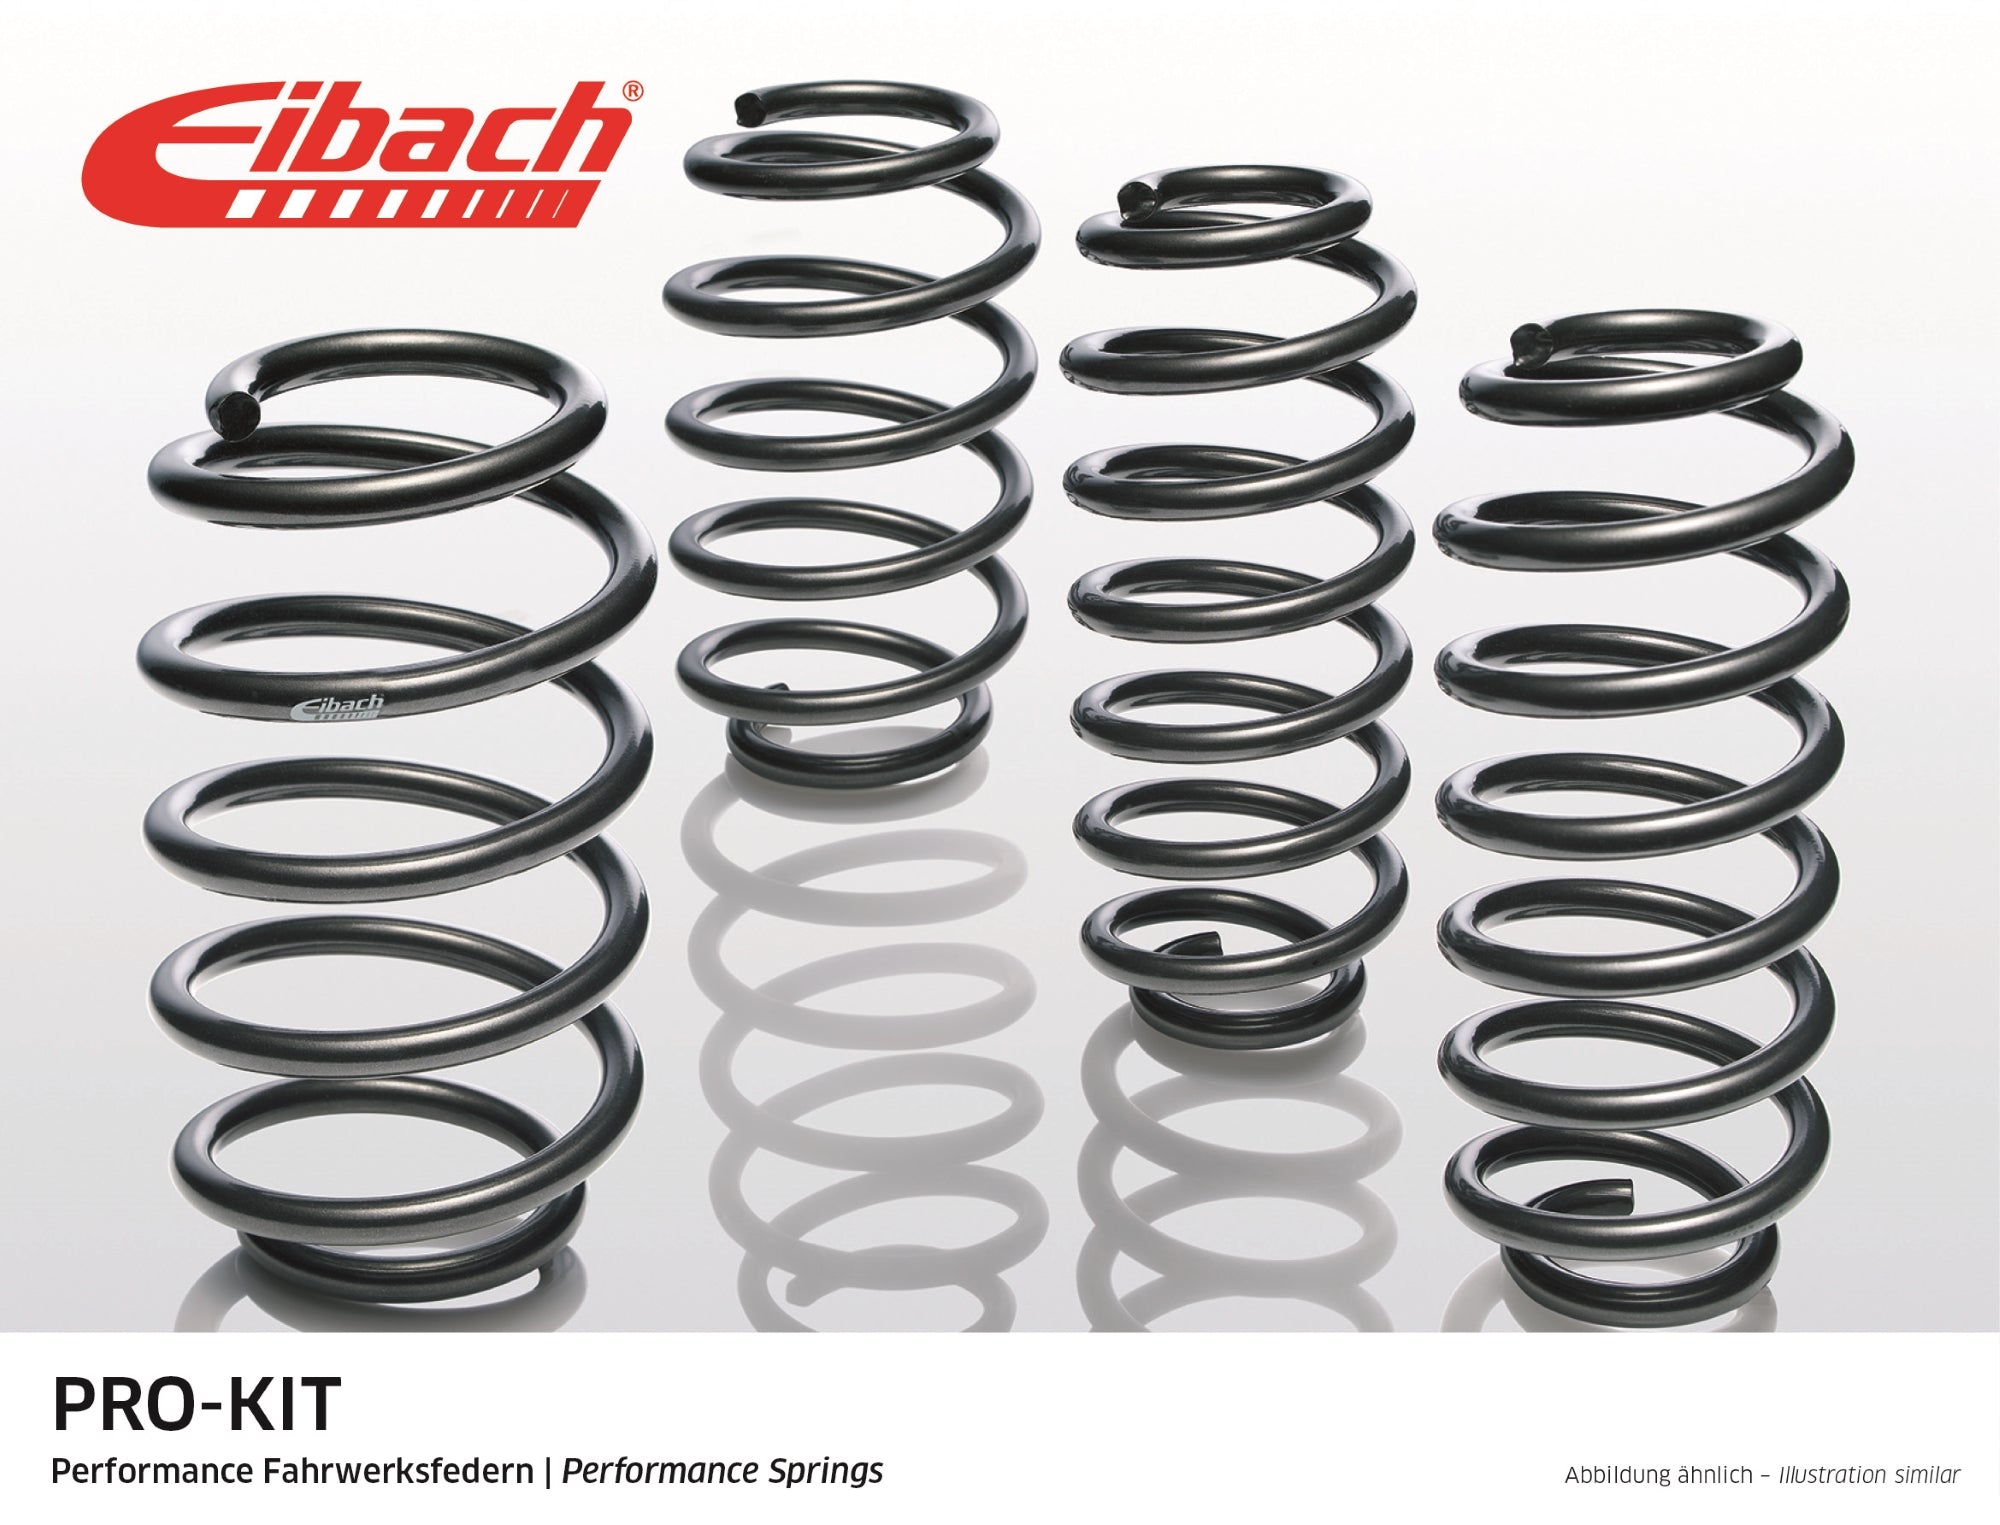 Eibach Suspension Pro-Kit (Performance Springs) Lowering Kit 911 2004-10 #E10-72-007-01-22